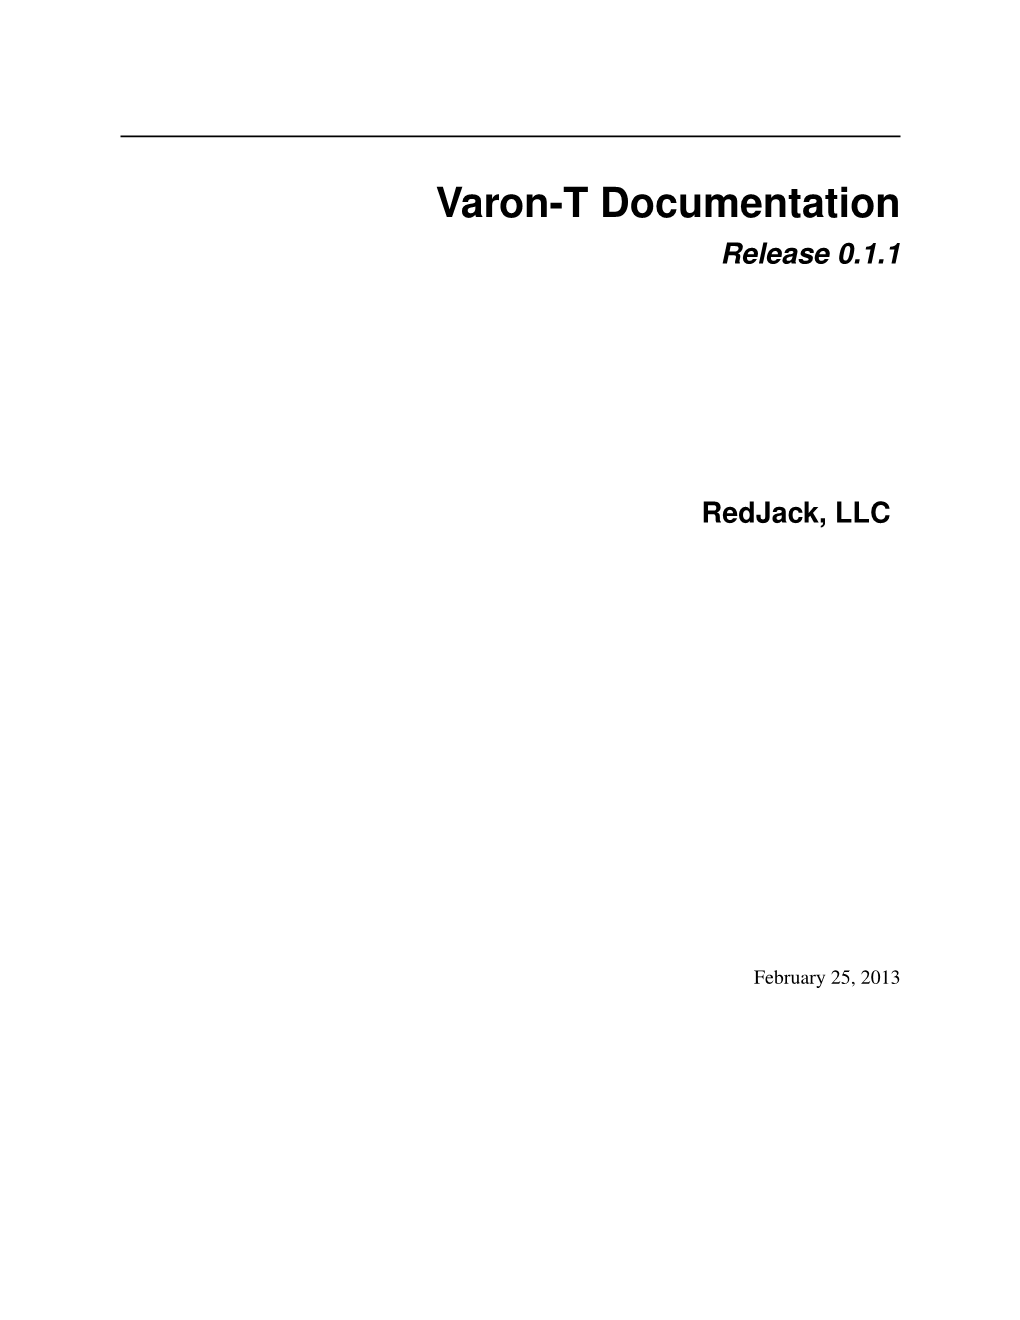 Varon-T Documentation Release 0.1.1